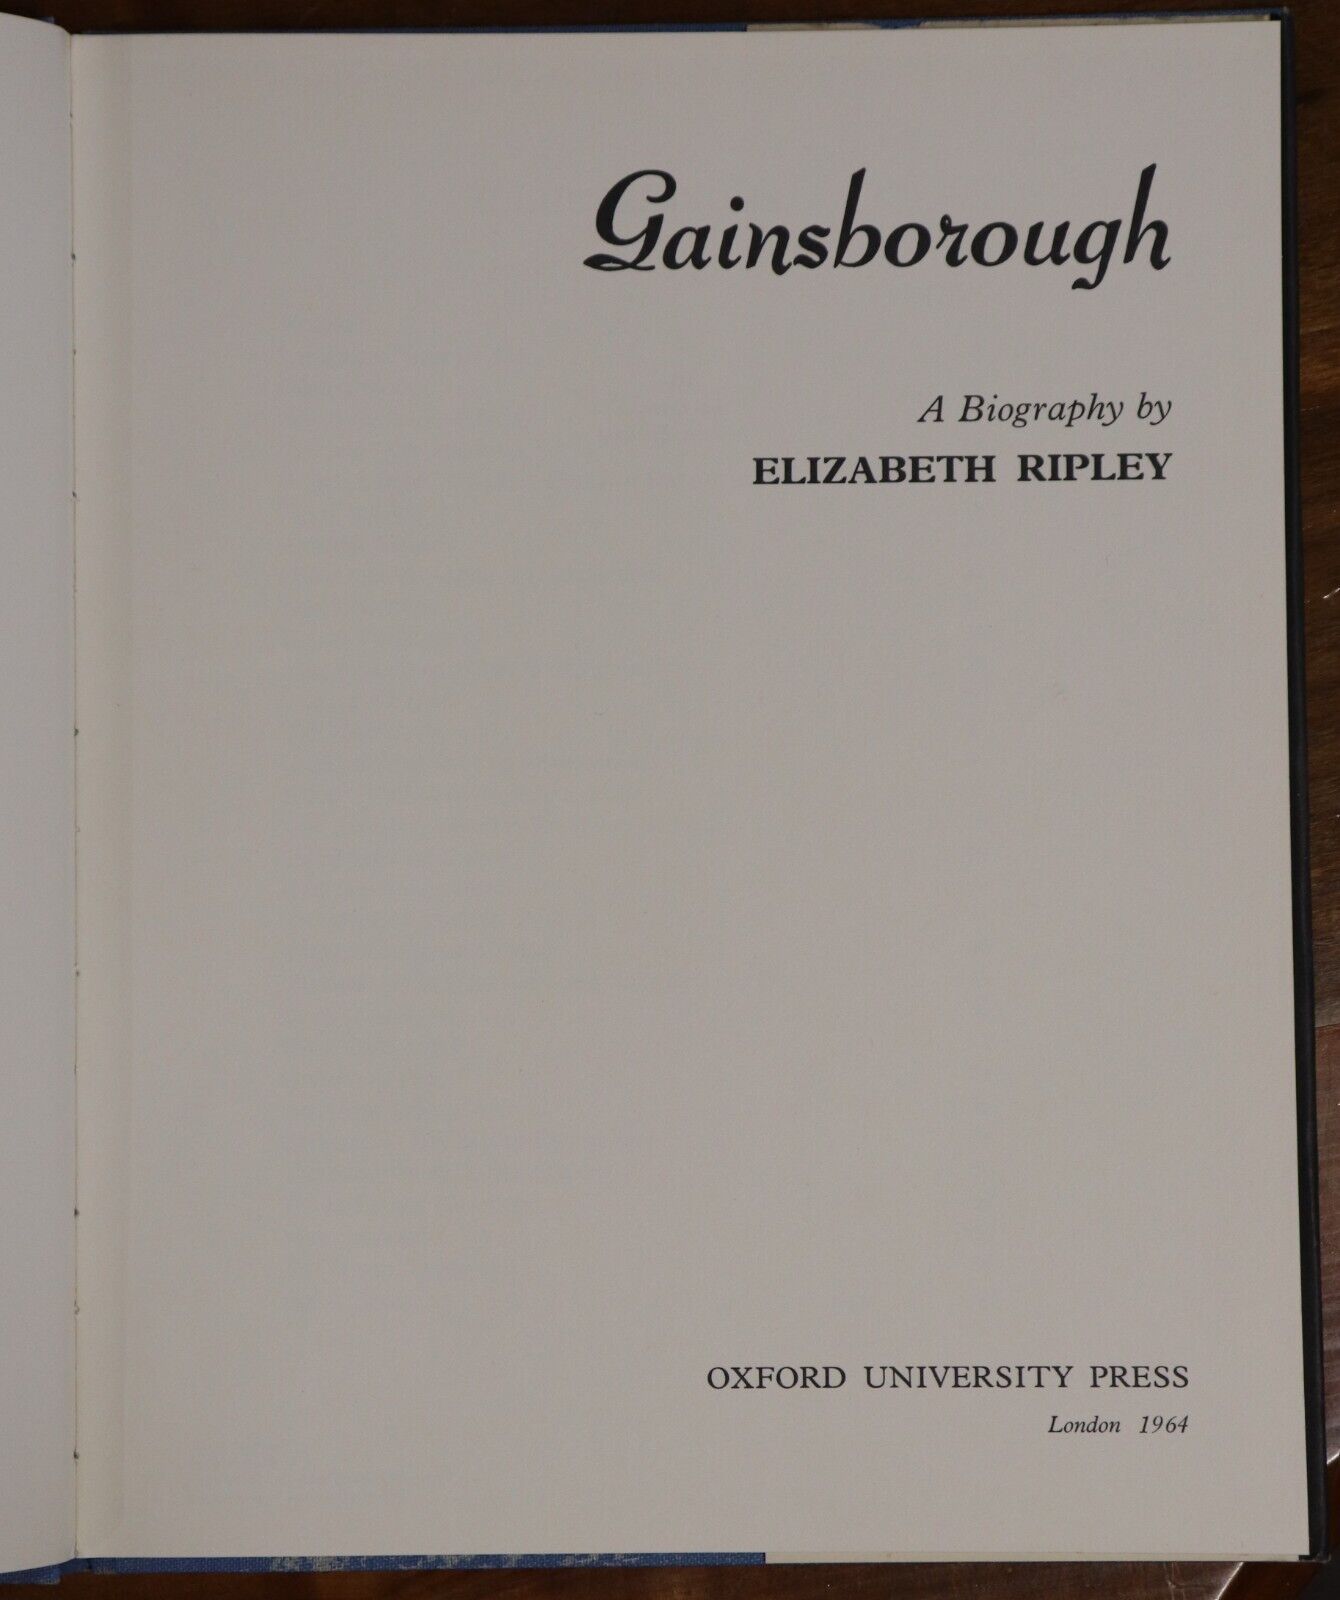 Gainsborough: A Biography by E Ripley - 1964 - 1st Edition British Artist Book - 0